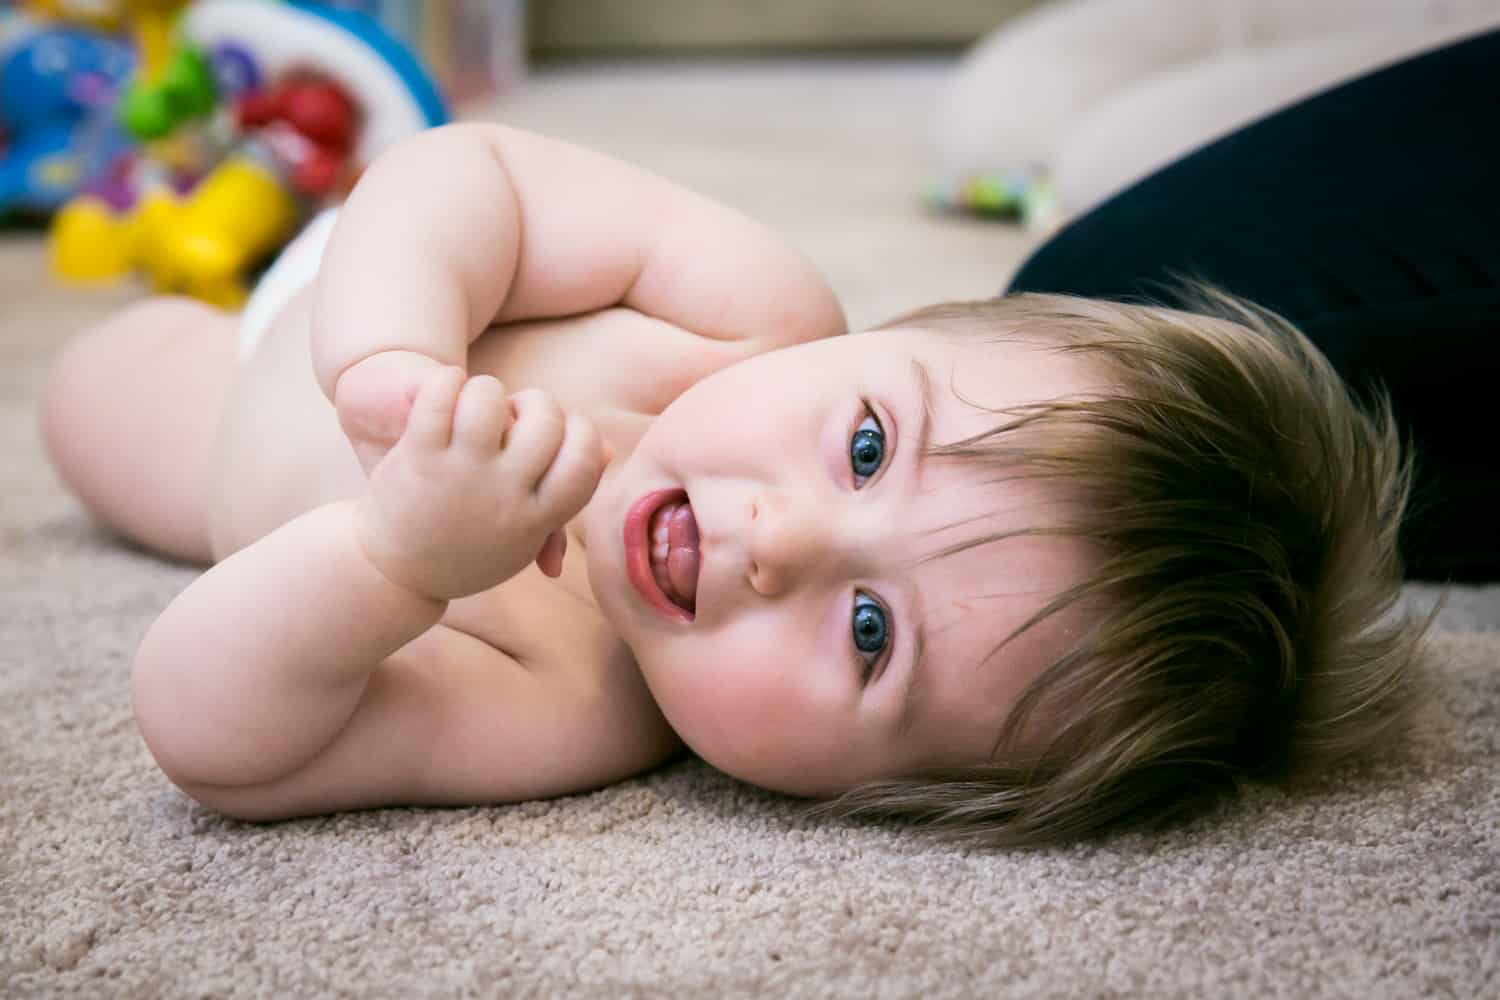 Baby boy wearing diaper rolling on carpet